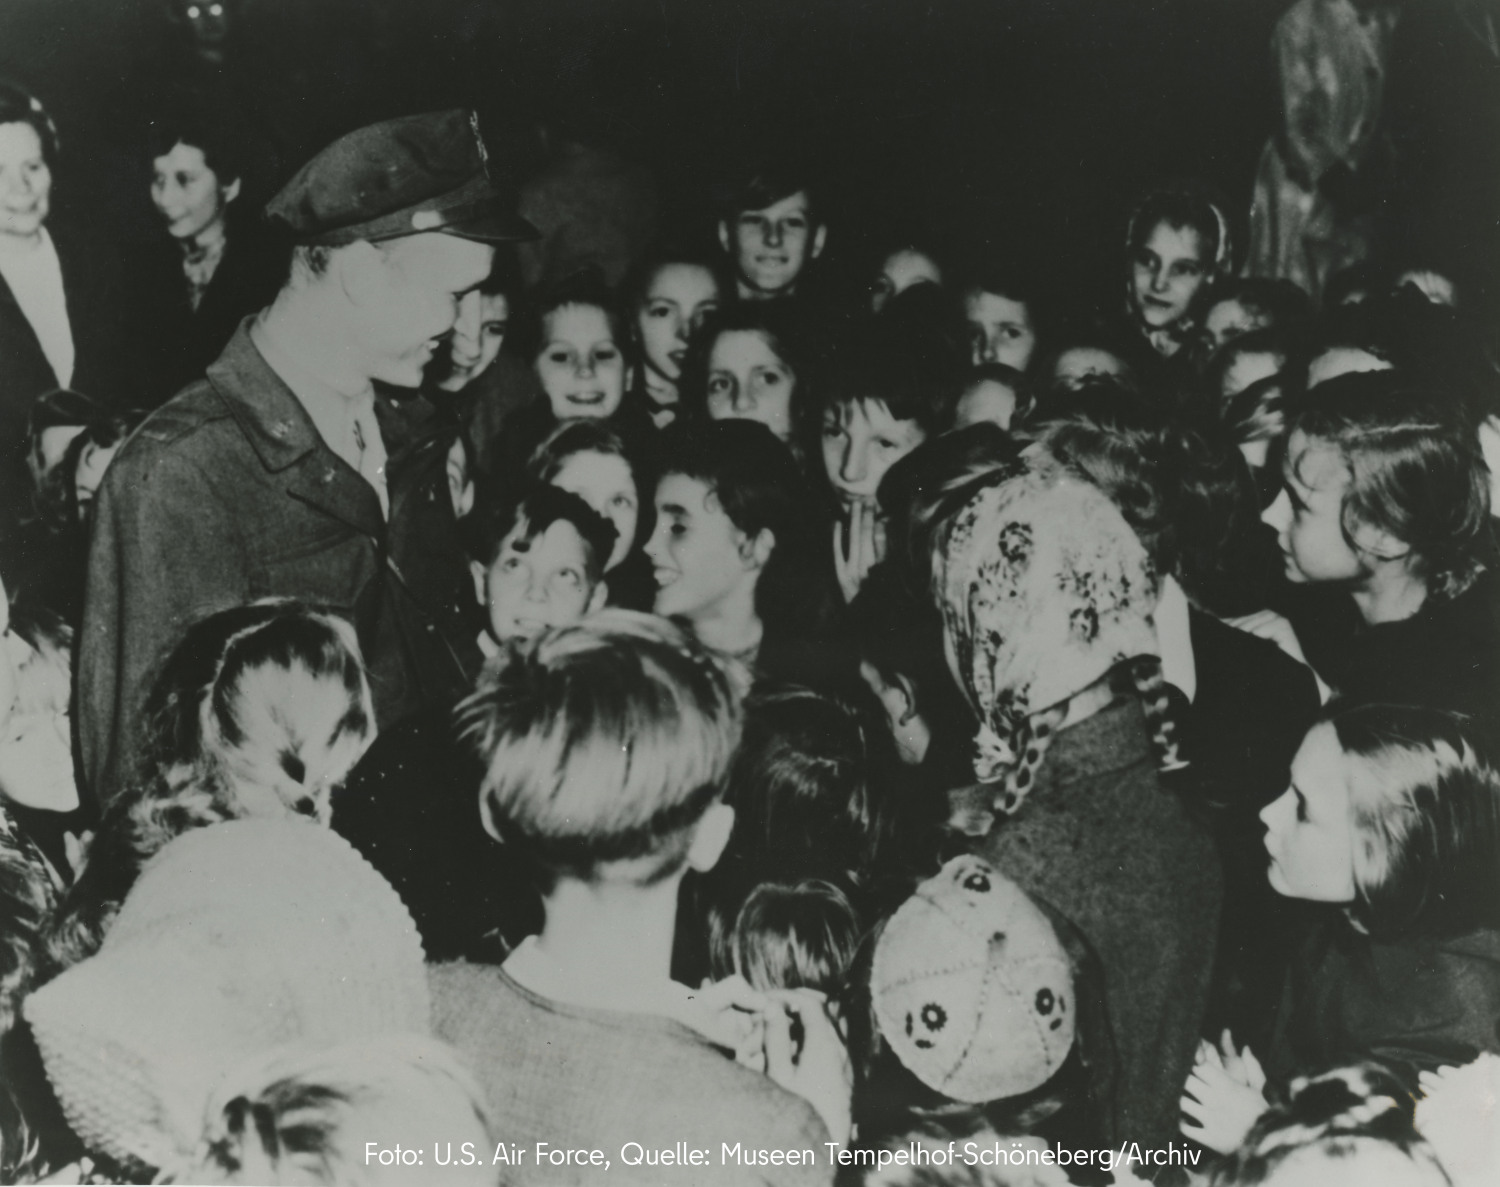 A man in uniform stands in a crowd of children